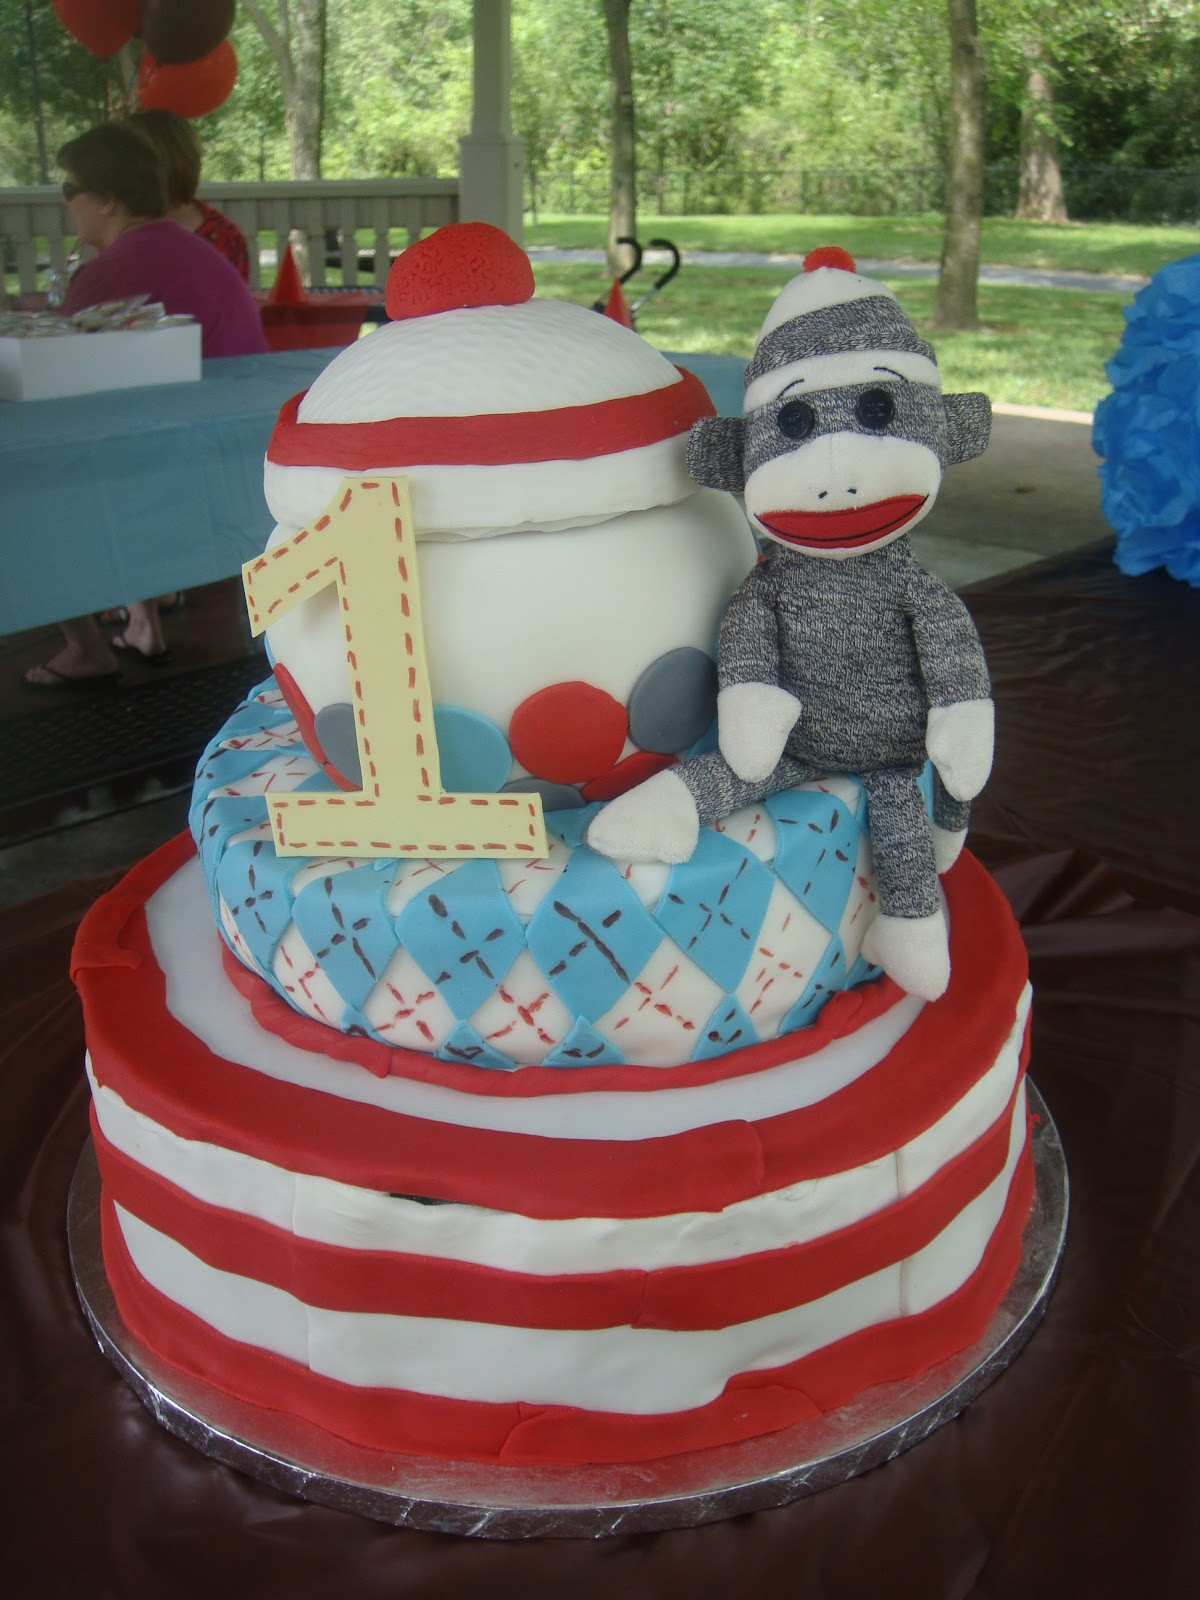 Sock Monkey Birthday Cake
 Cakes By LAM Designs Sock Monkey 1st Birthday Cake